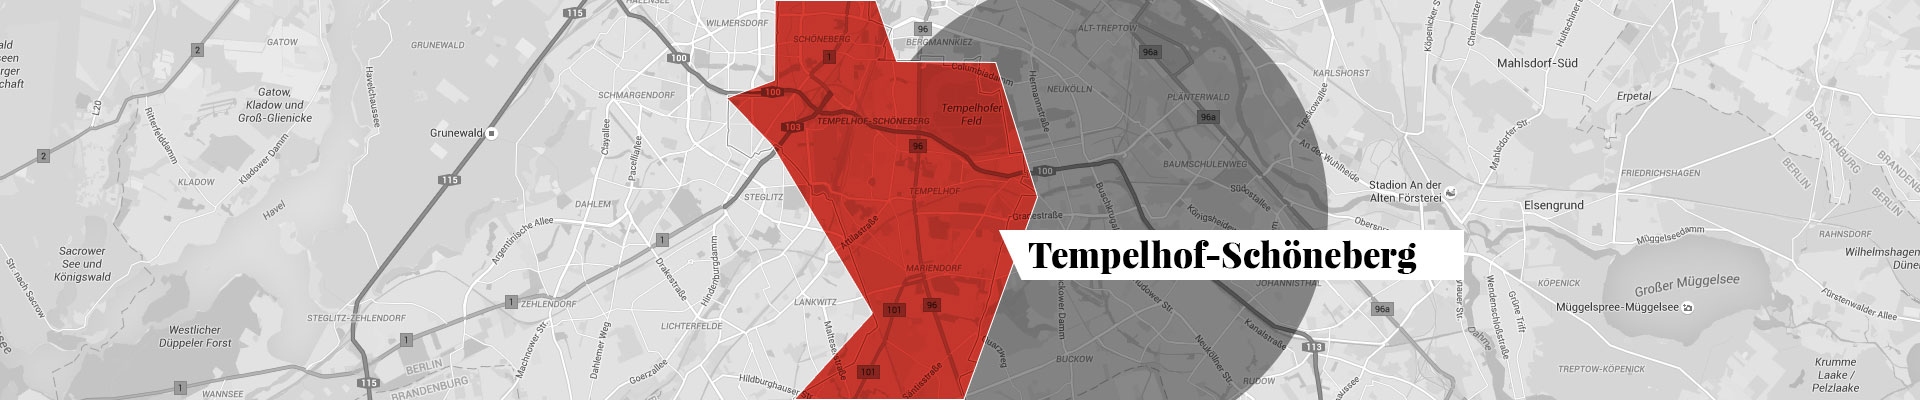 Tempelhof-Schöneberg Stadtplan